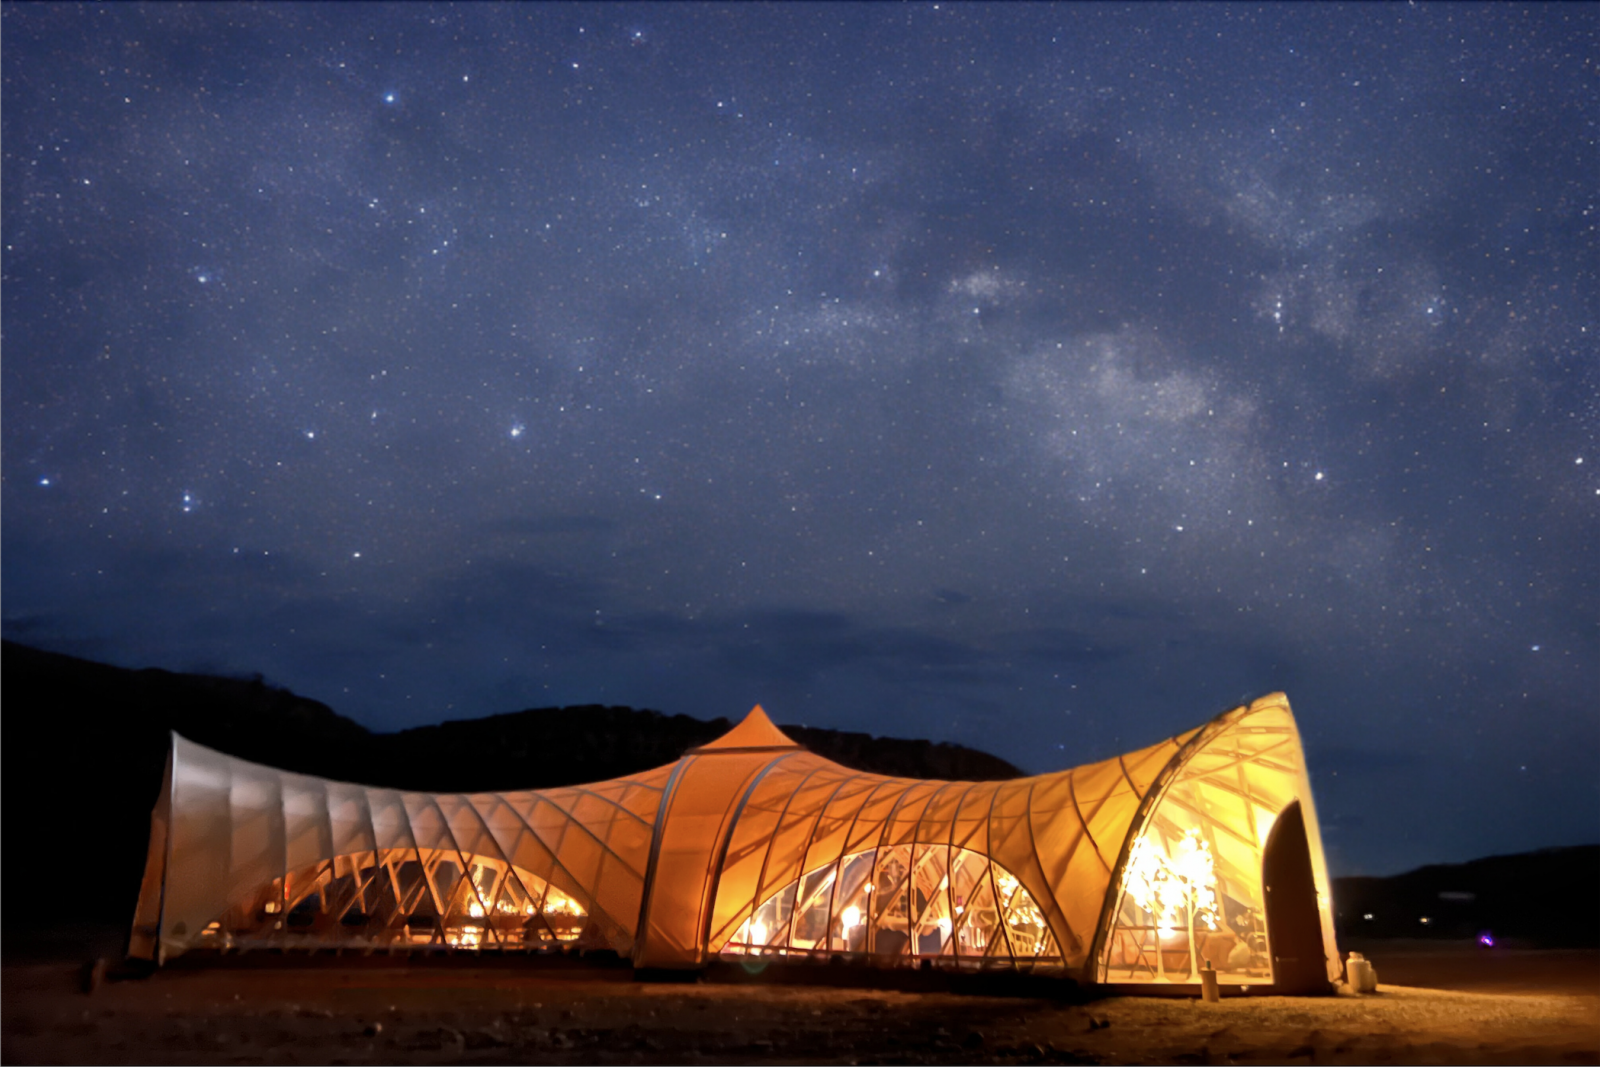 STROHBOID pavilion at night in Colorado